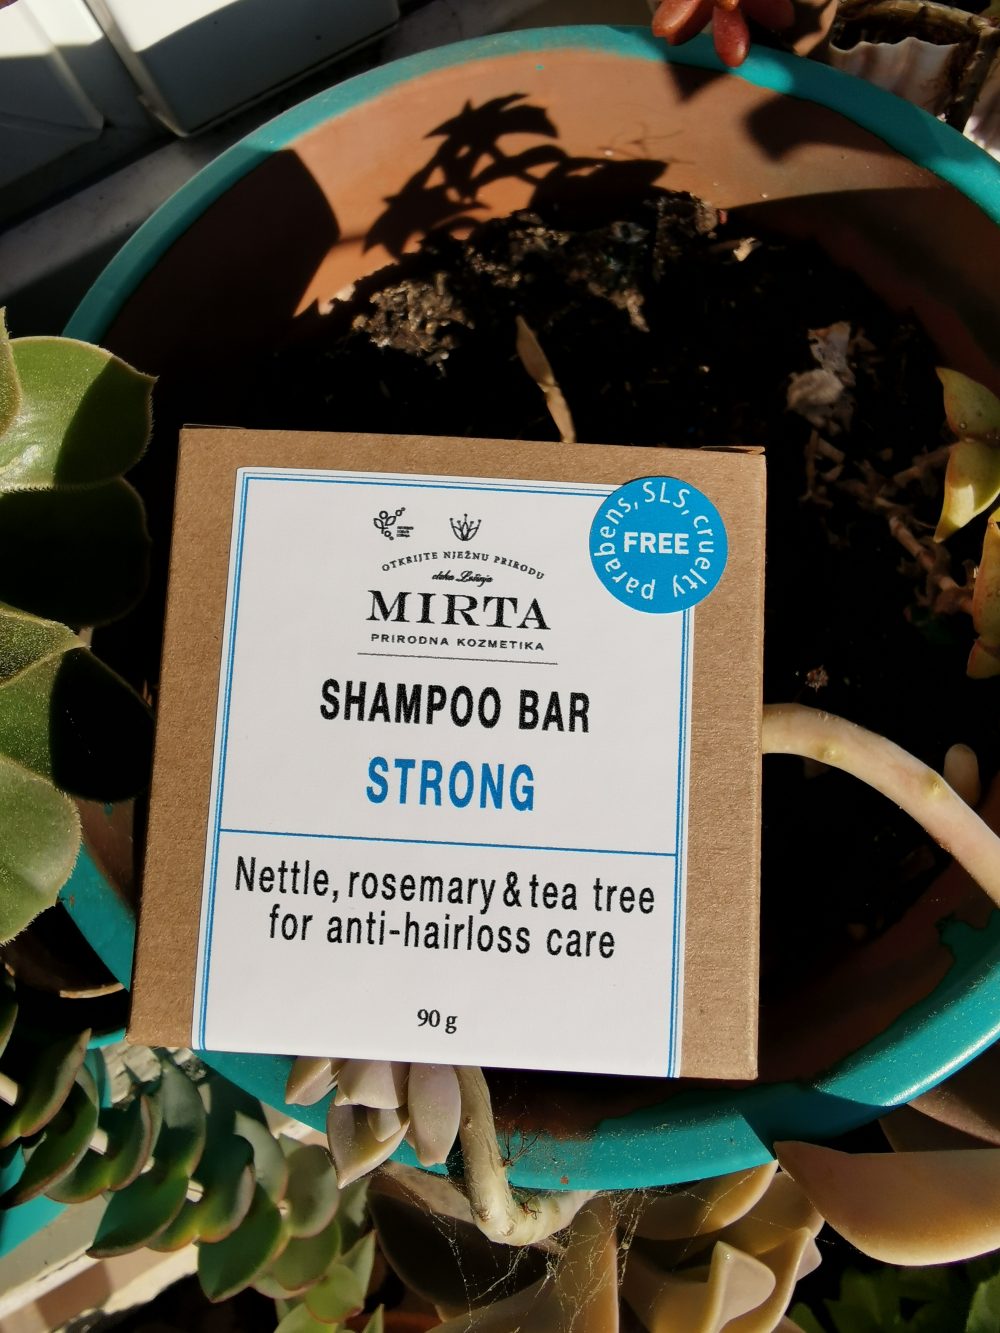 shampoo bar for antihairloss care